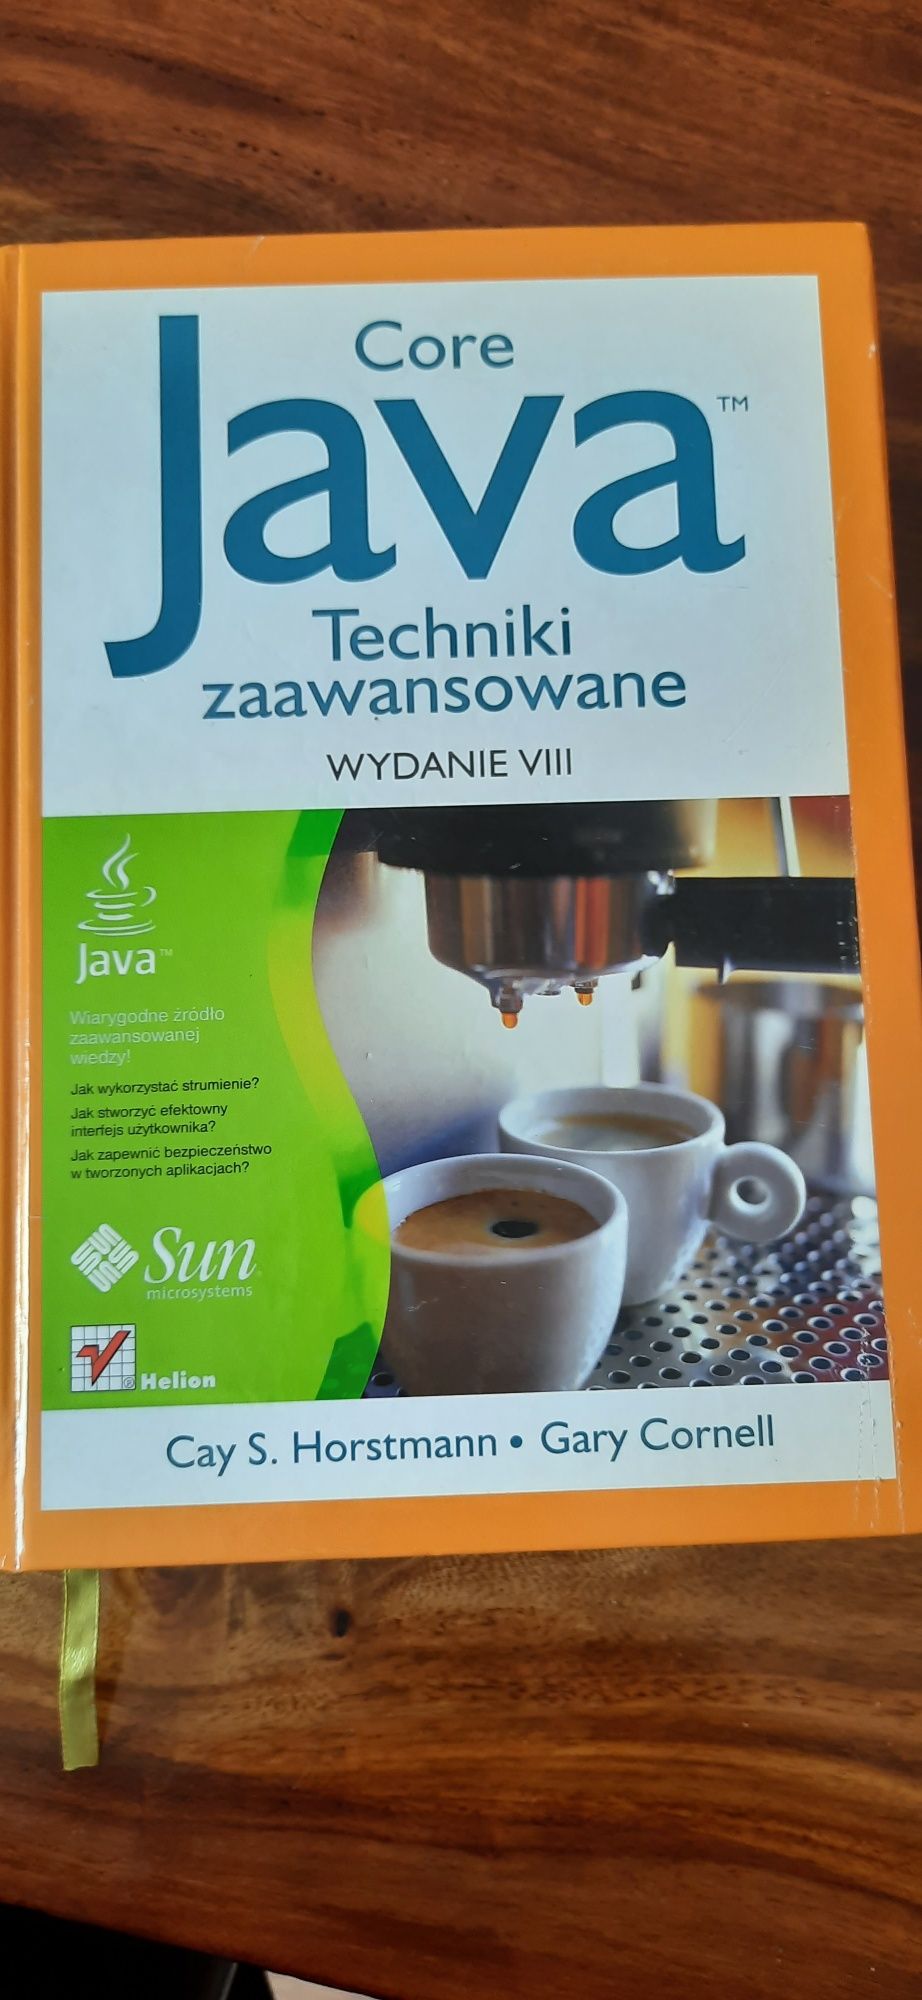 " Core Java techniki zaawansowane"